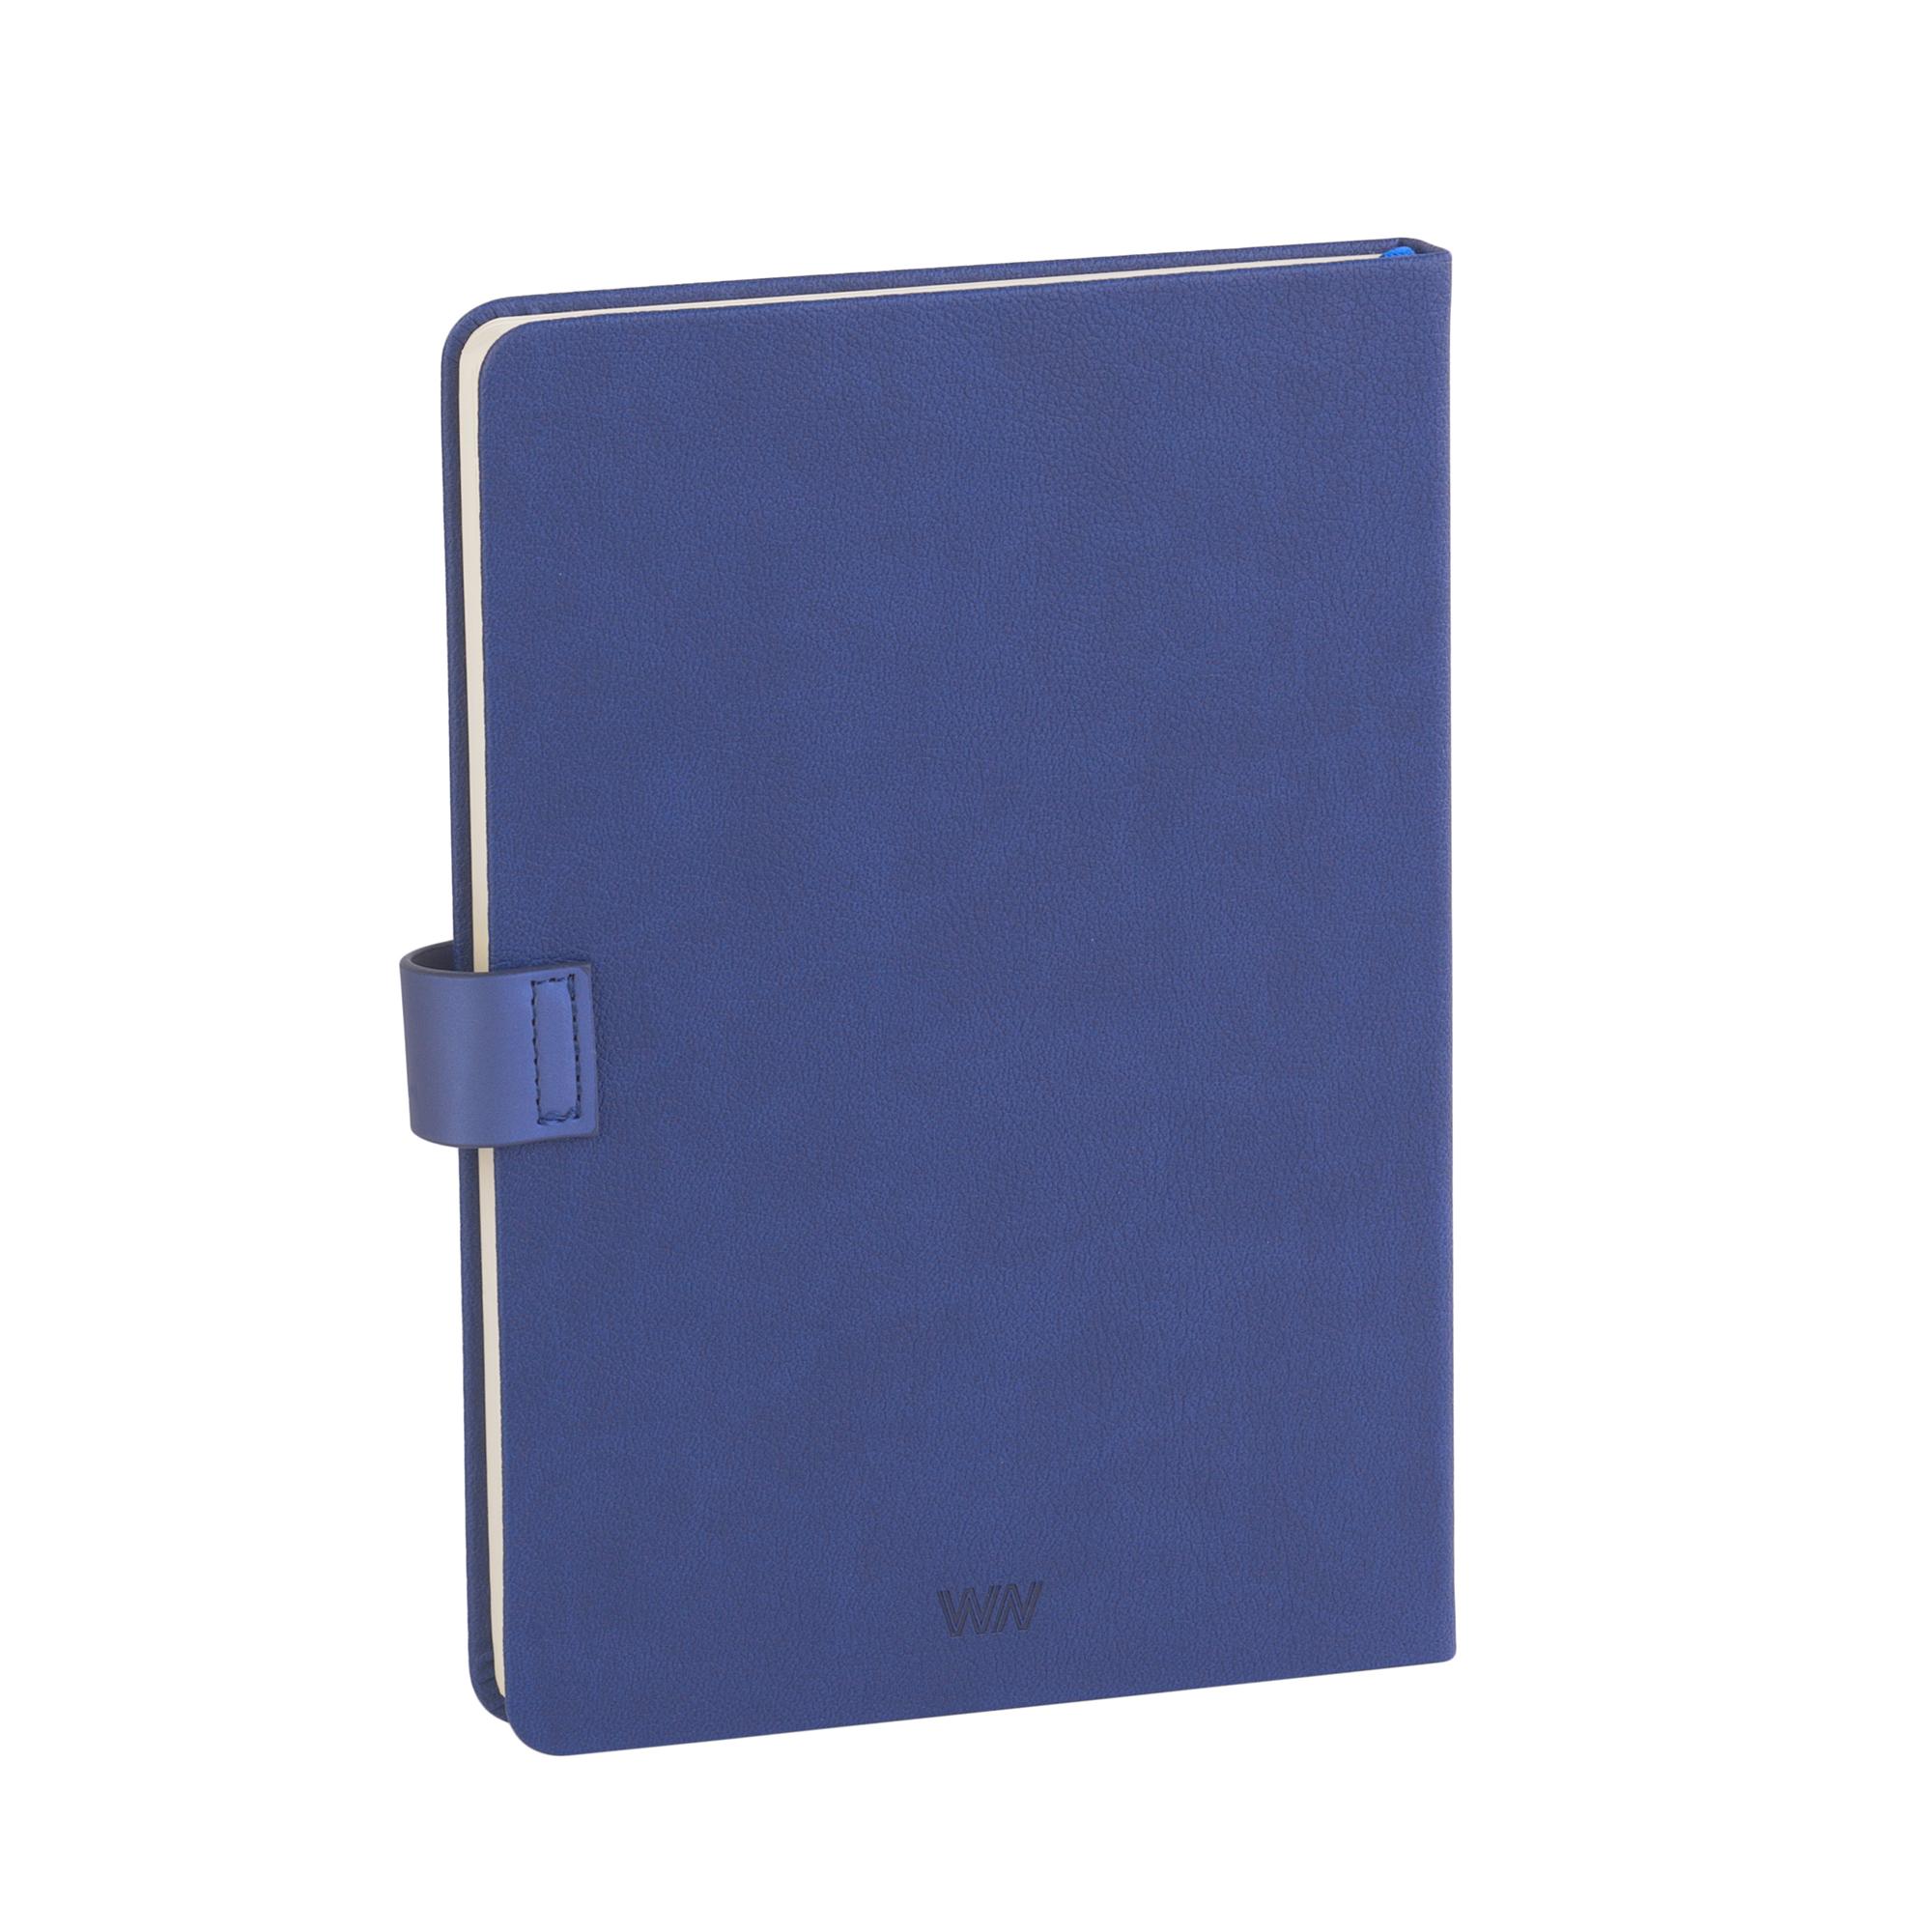 Ежедневник недатированный "Монти", формат А5, цвет синий, фото 2